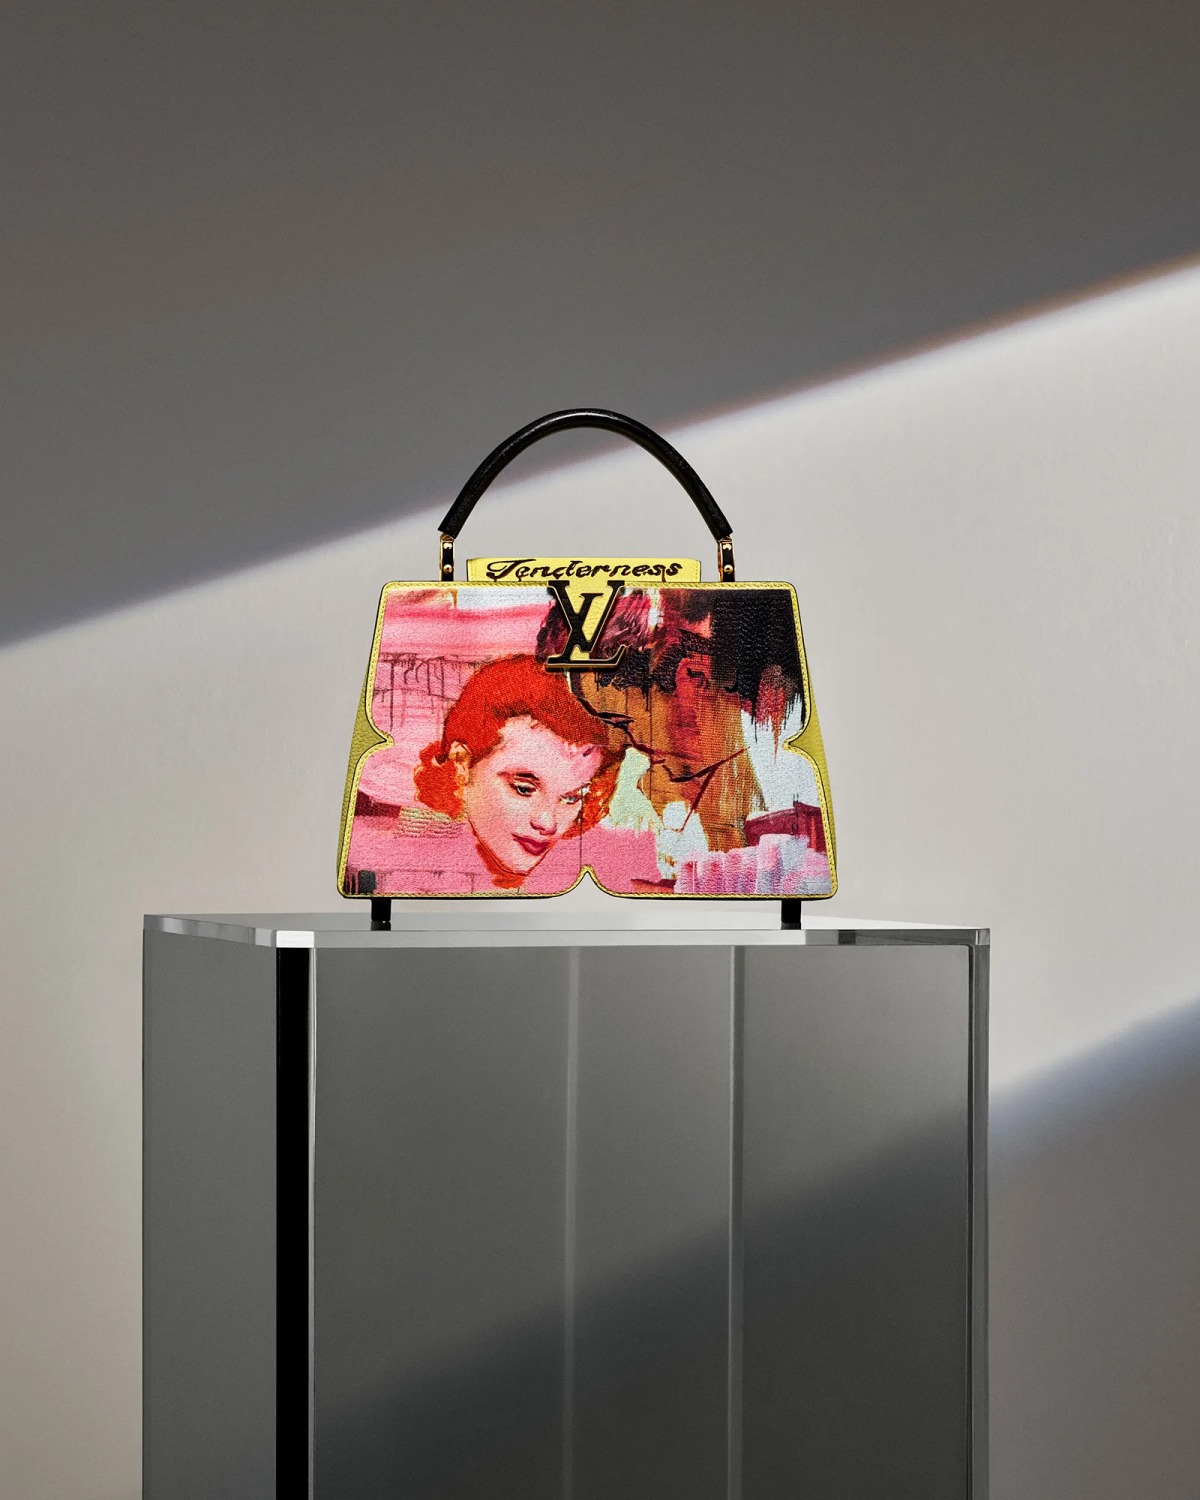 Tursic & Mille's Capucines handbag, photo courtesy of Peter Langer/Louis Vuitton